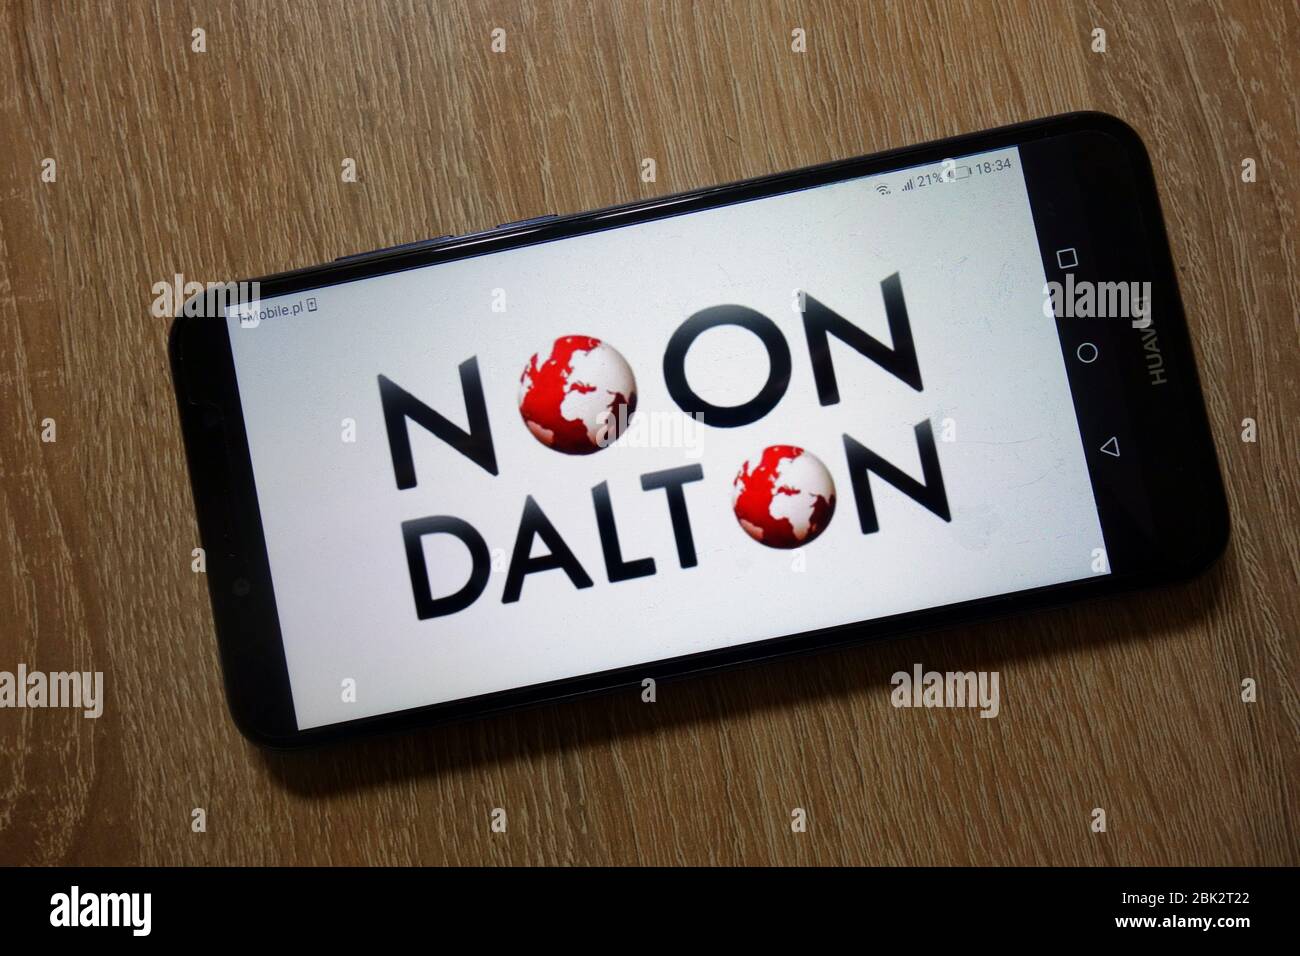 Noon Dalton logo displayed on smartphone Stock Photo